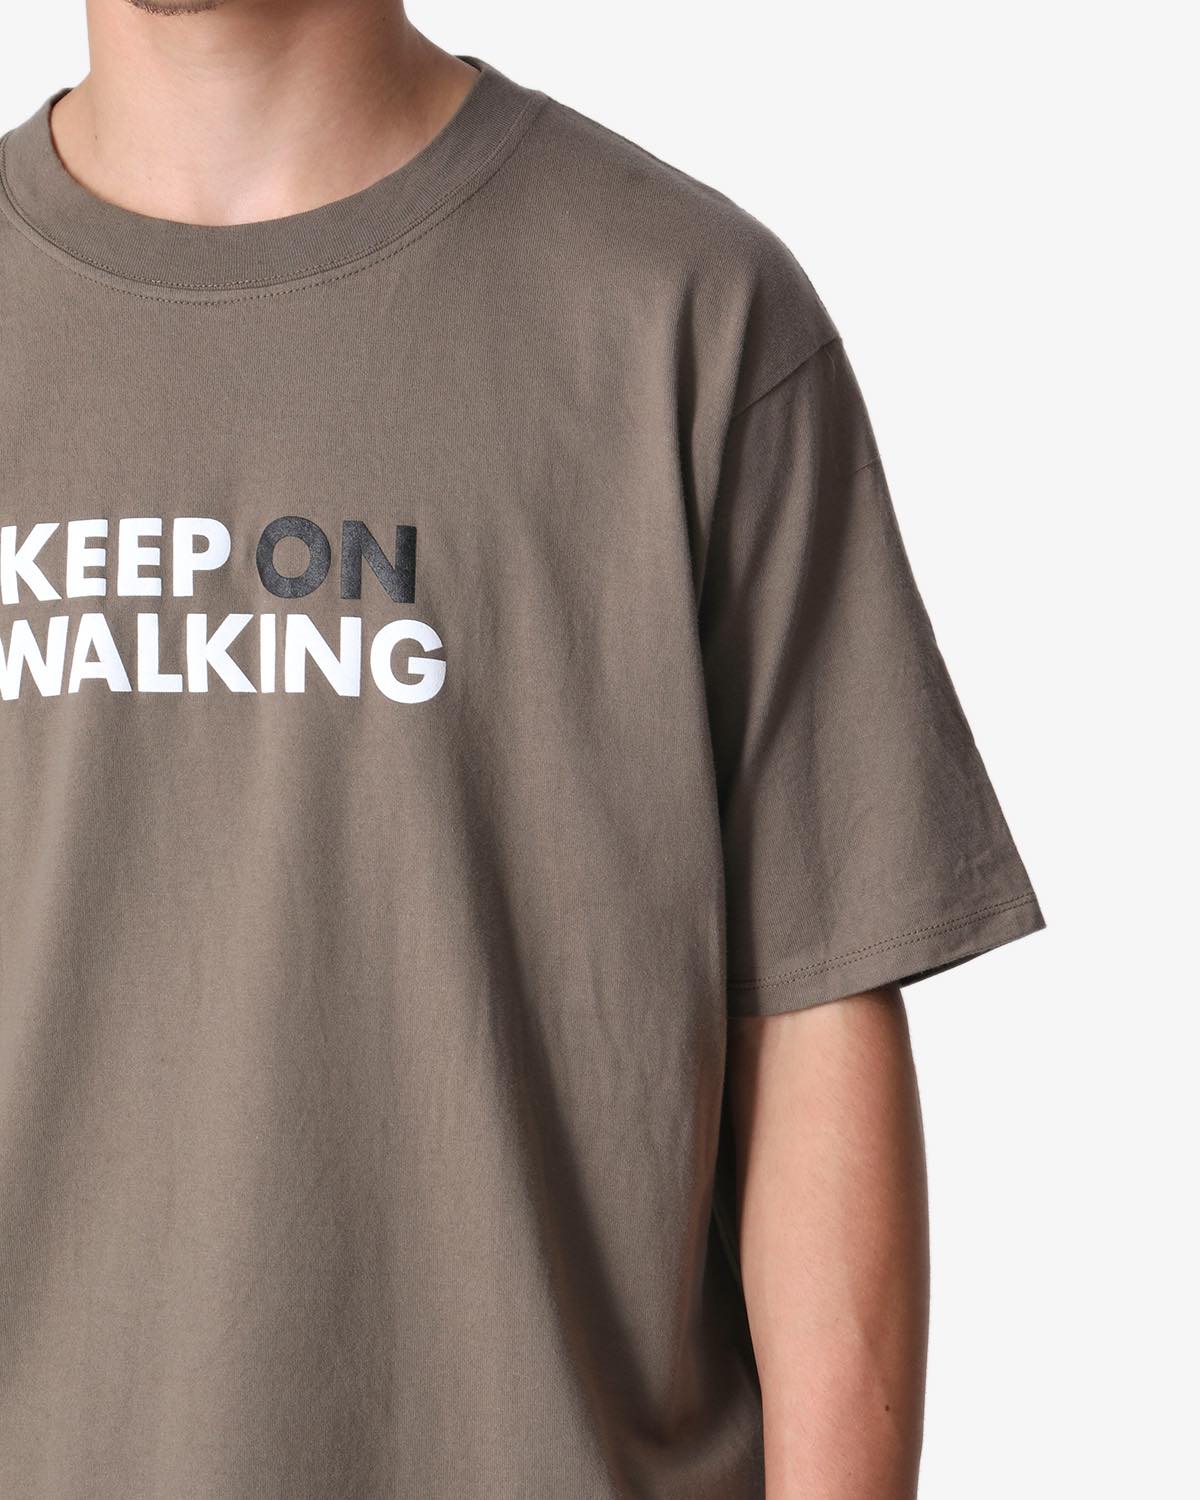 DWELLER S/S TEE "KEEP ON WALKING"